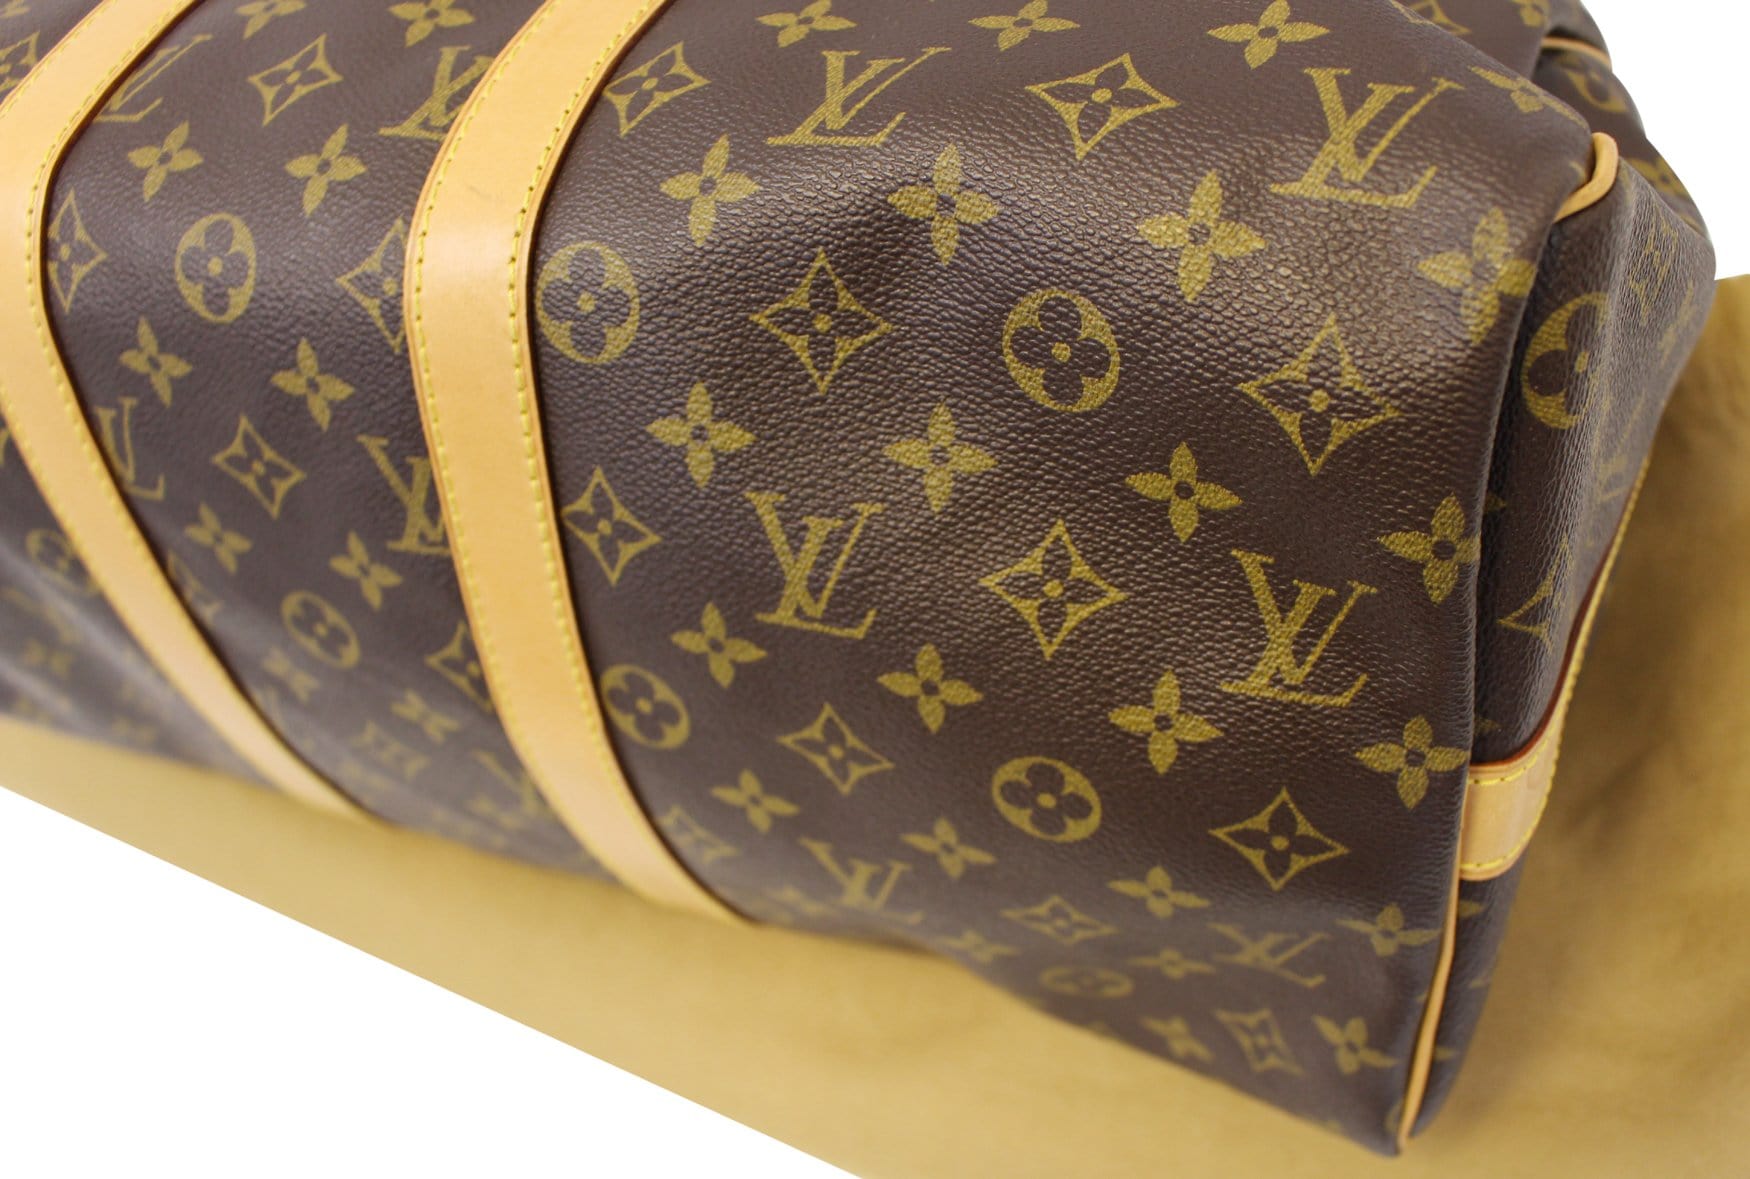 Louis Vuitton Keepall Bandouliere Bag Monogram Revelation Leather 45 Brown  2207801